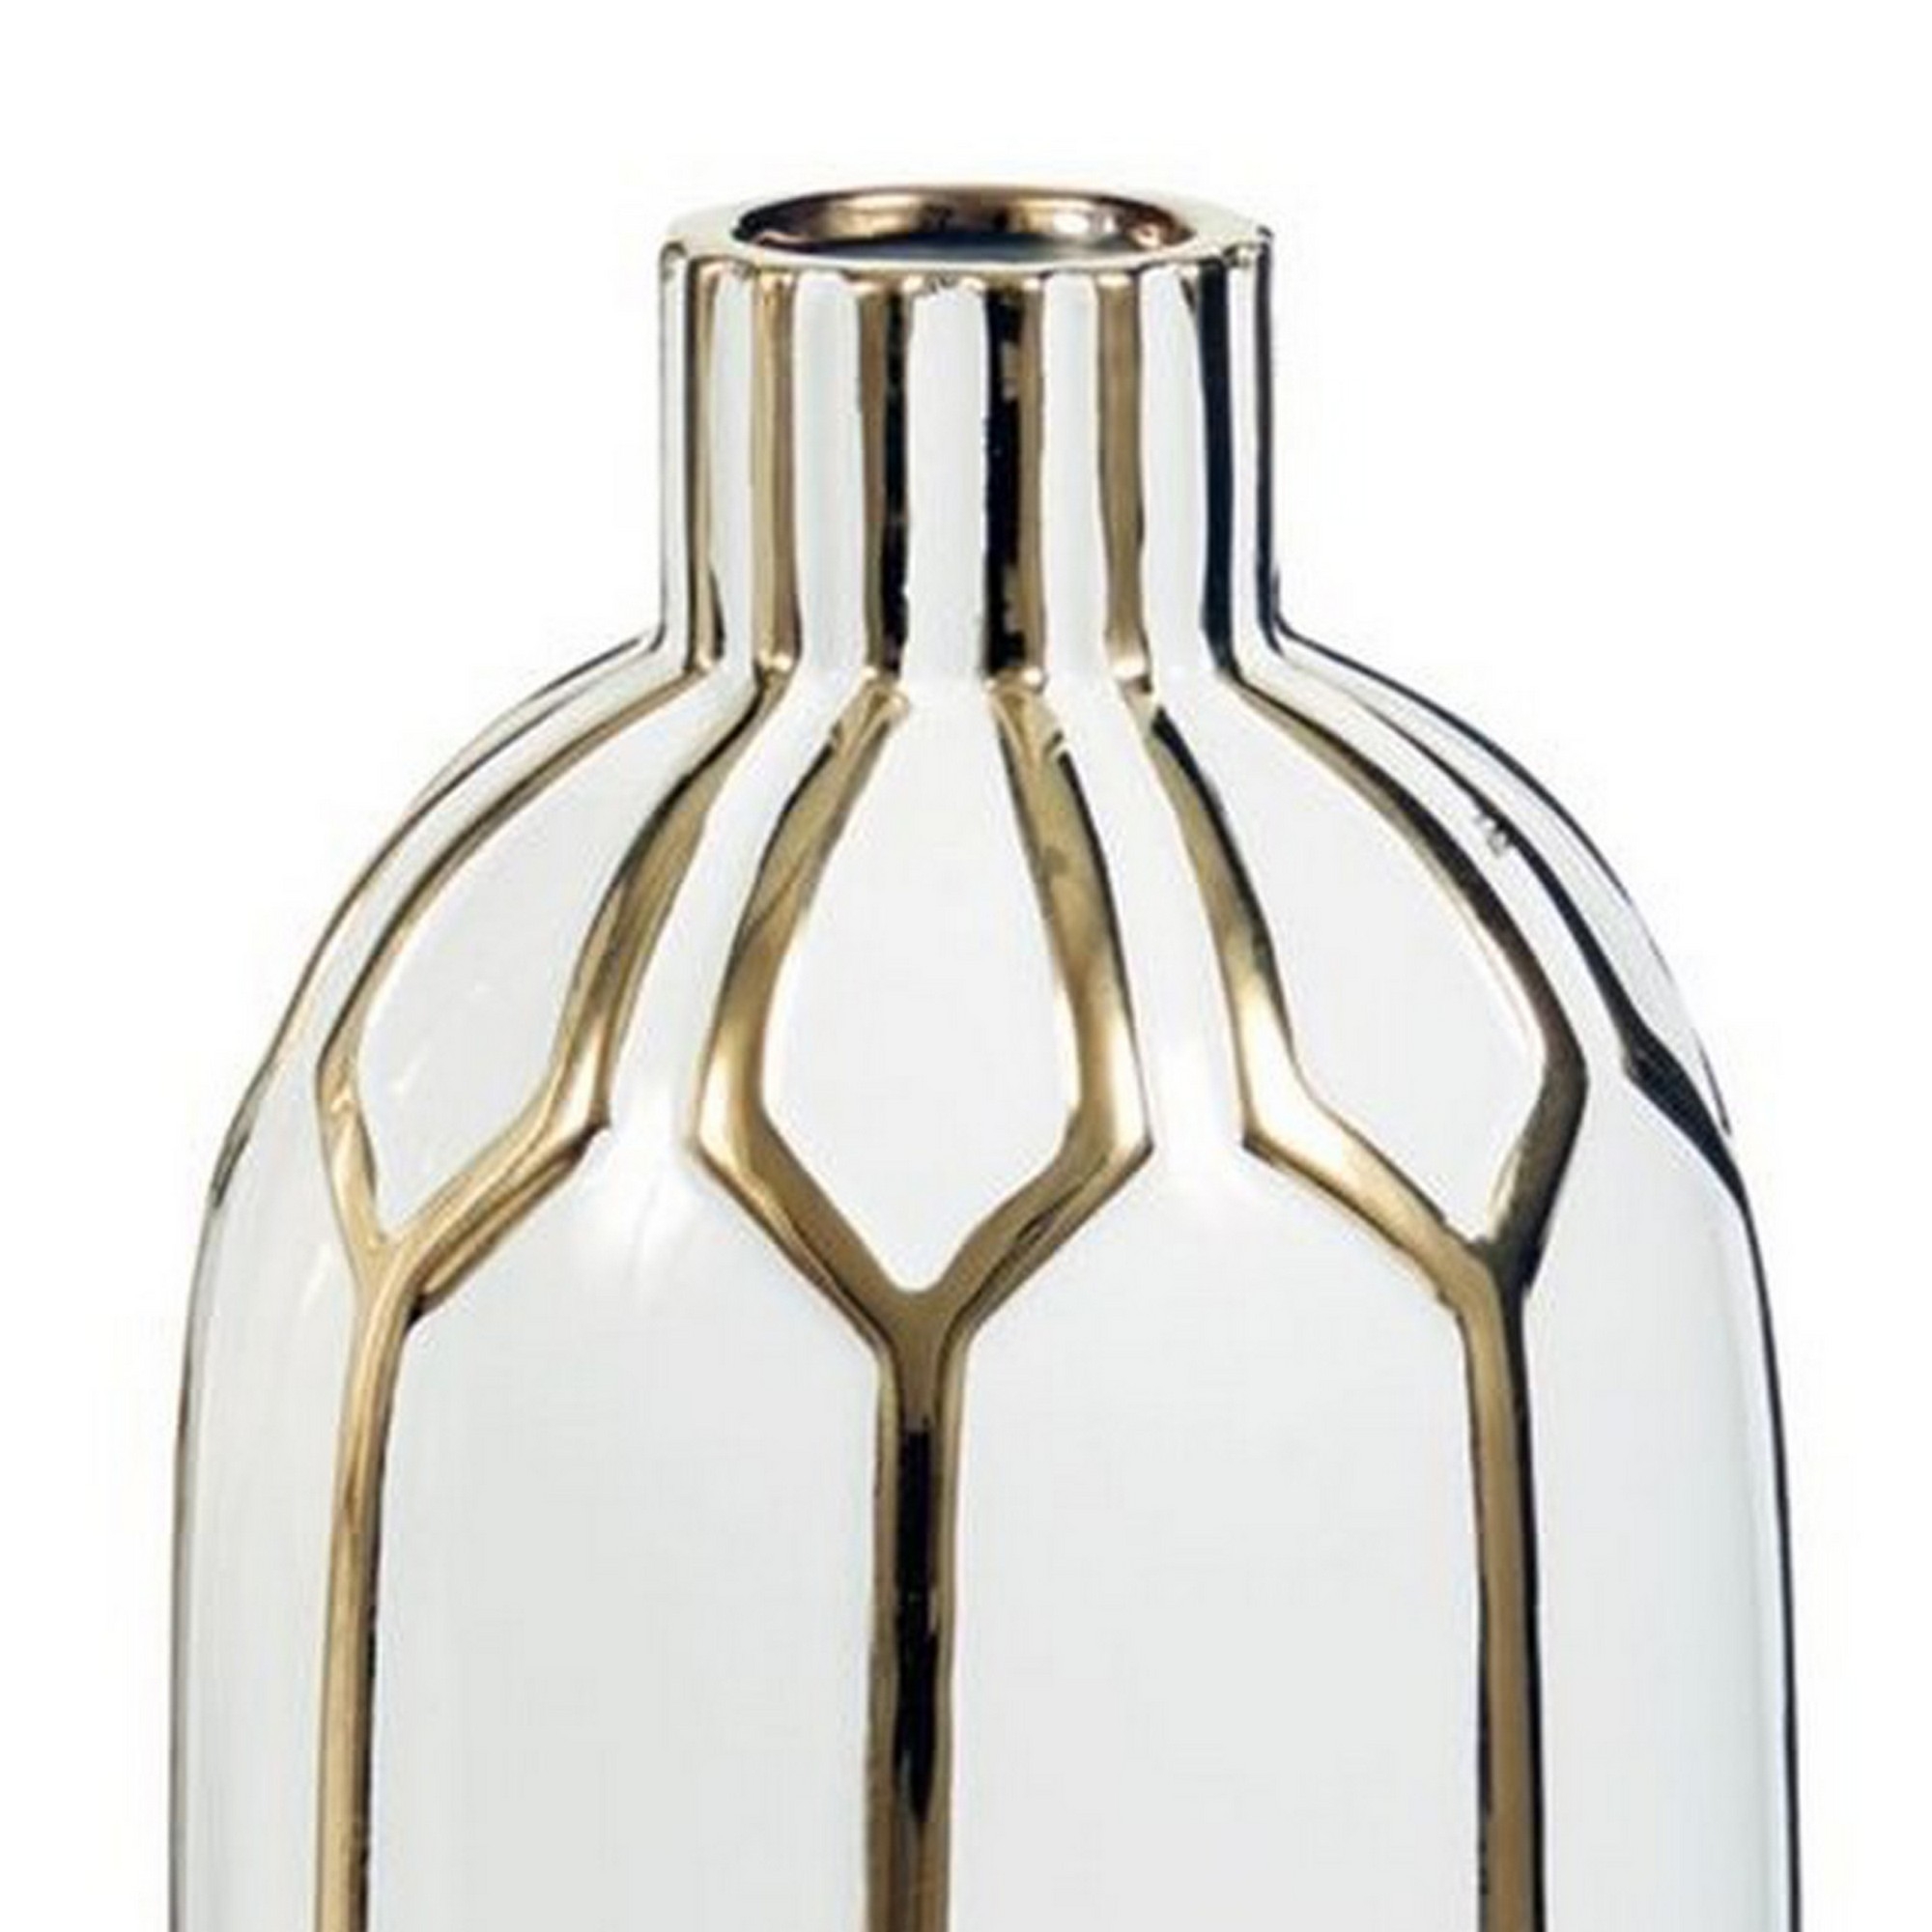 Vase With Honeycomb Geometric Design, Set Of 2, White And Gold- Saltoro Sherpi